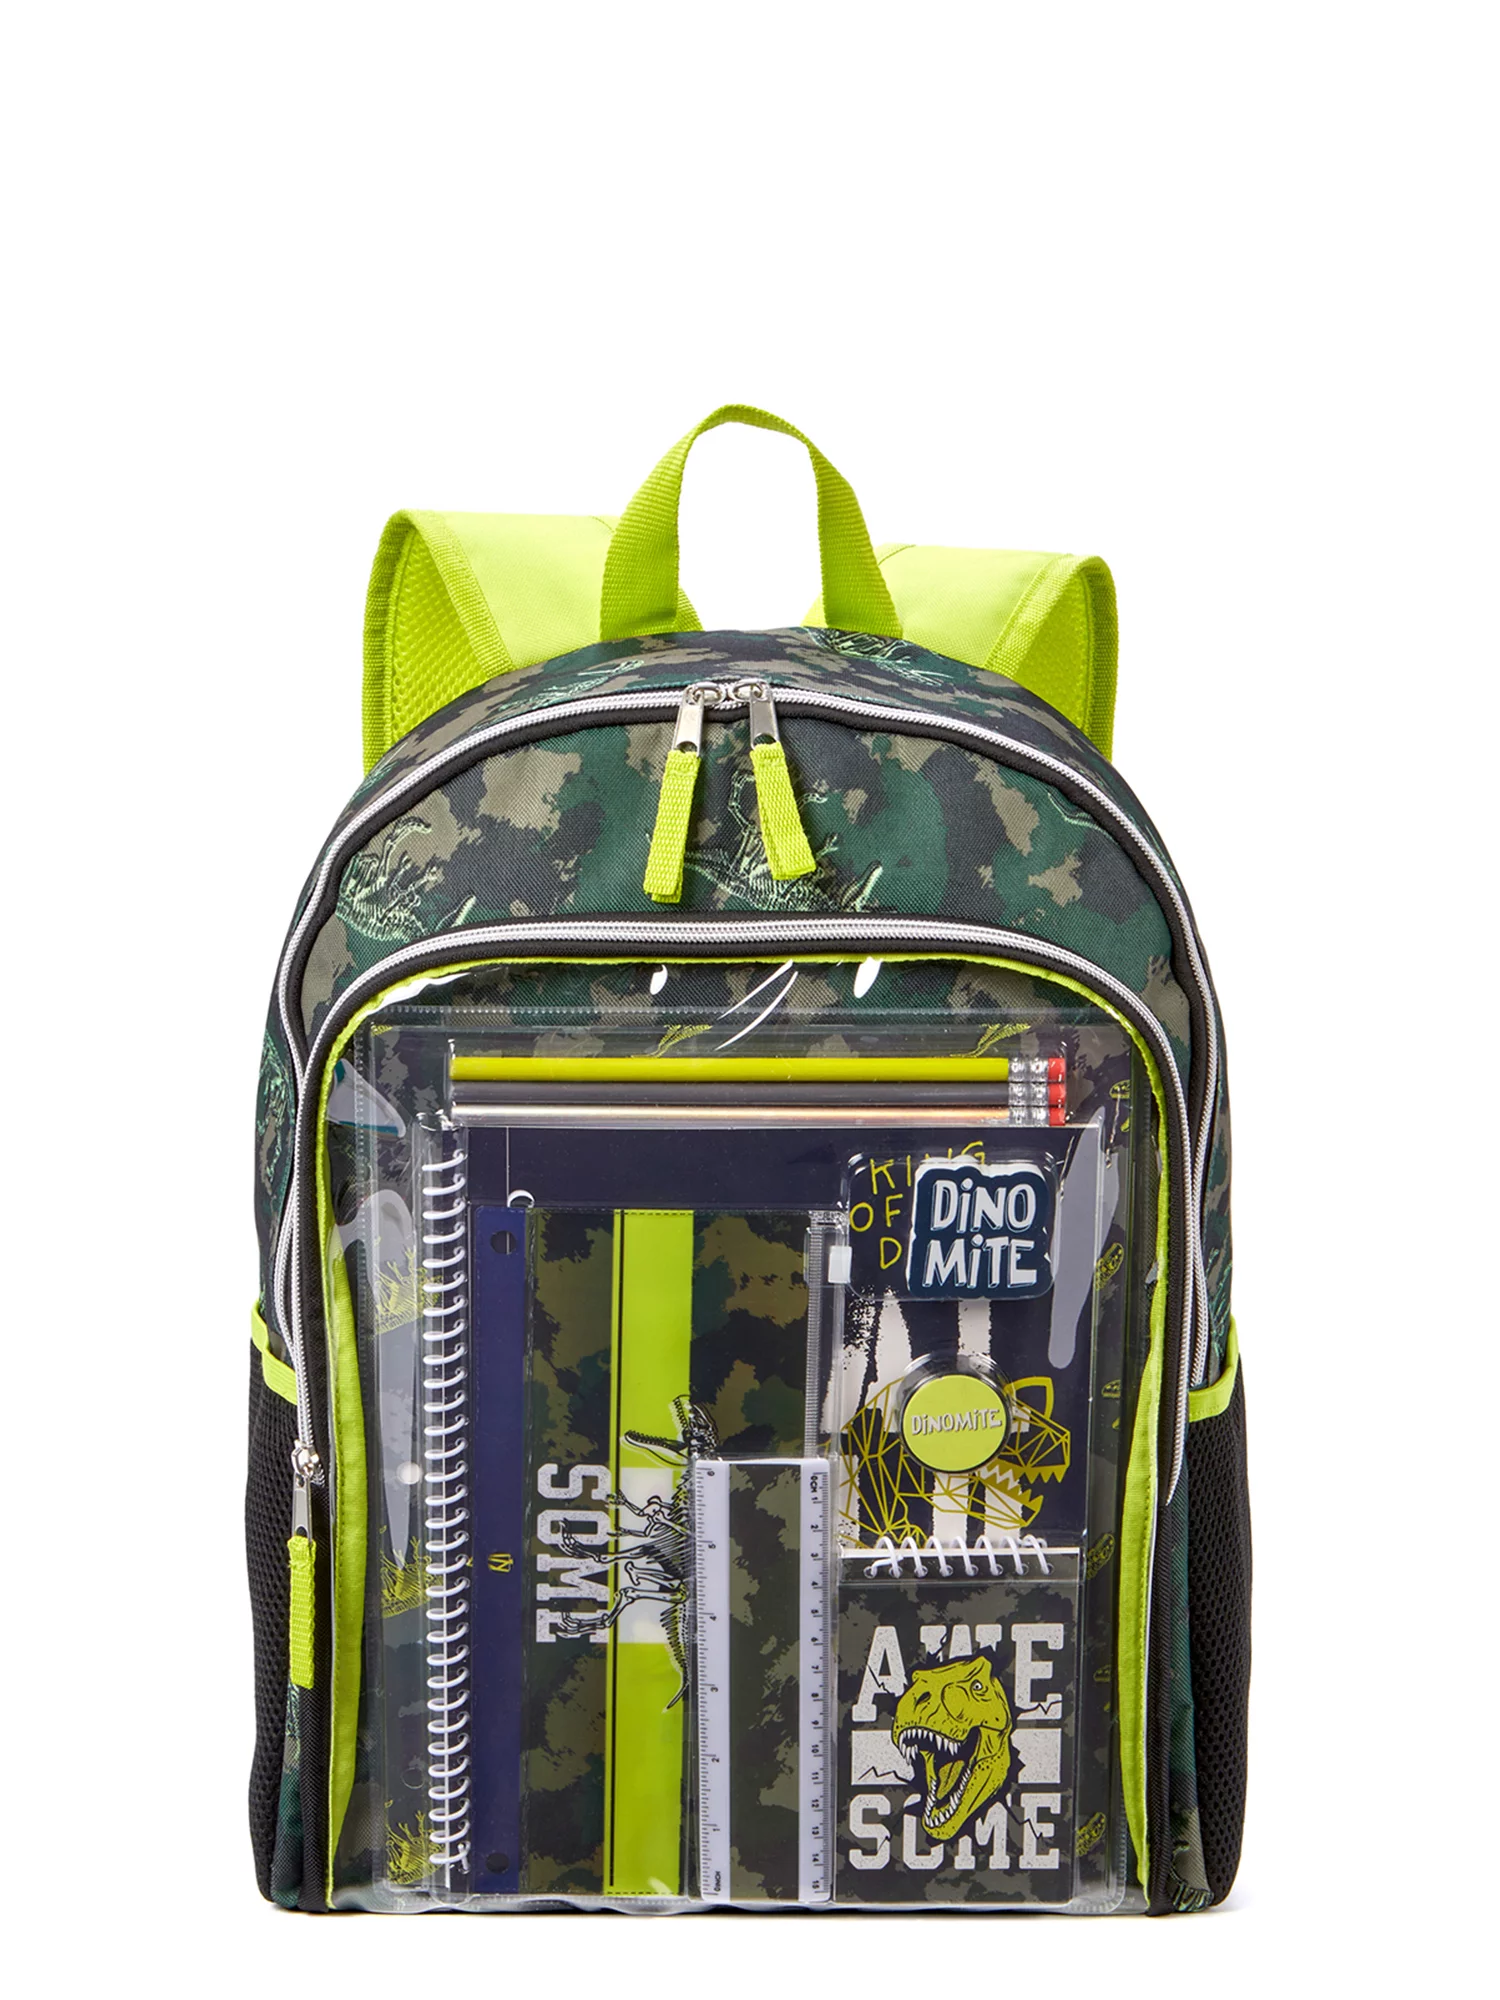 Schoolyard Vibes Boys Children Backpack with Stationary Set Dinosaur Print, Green